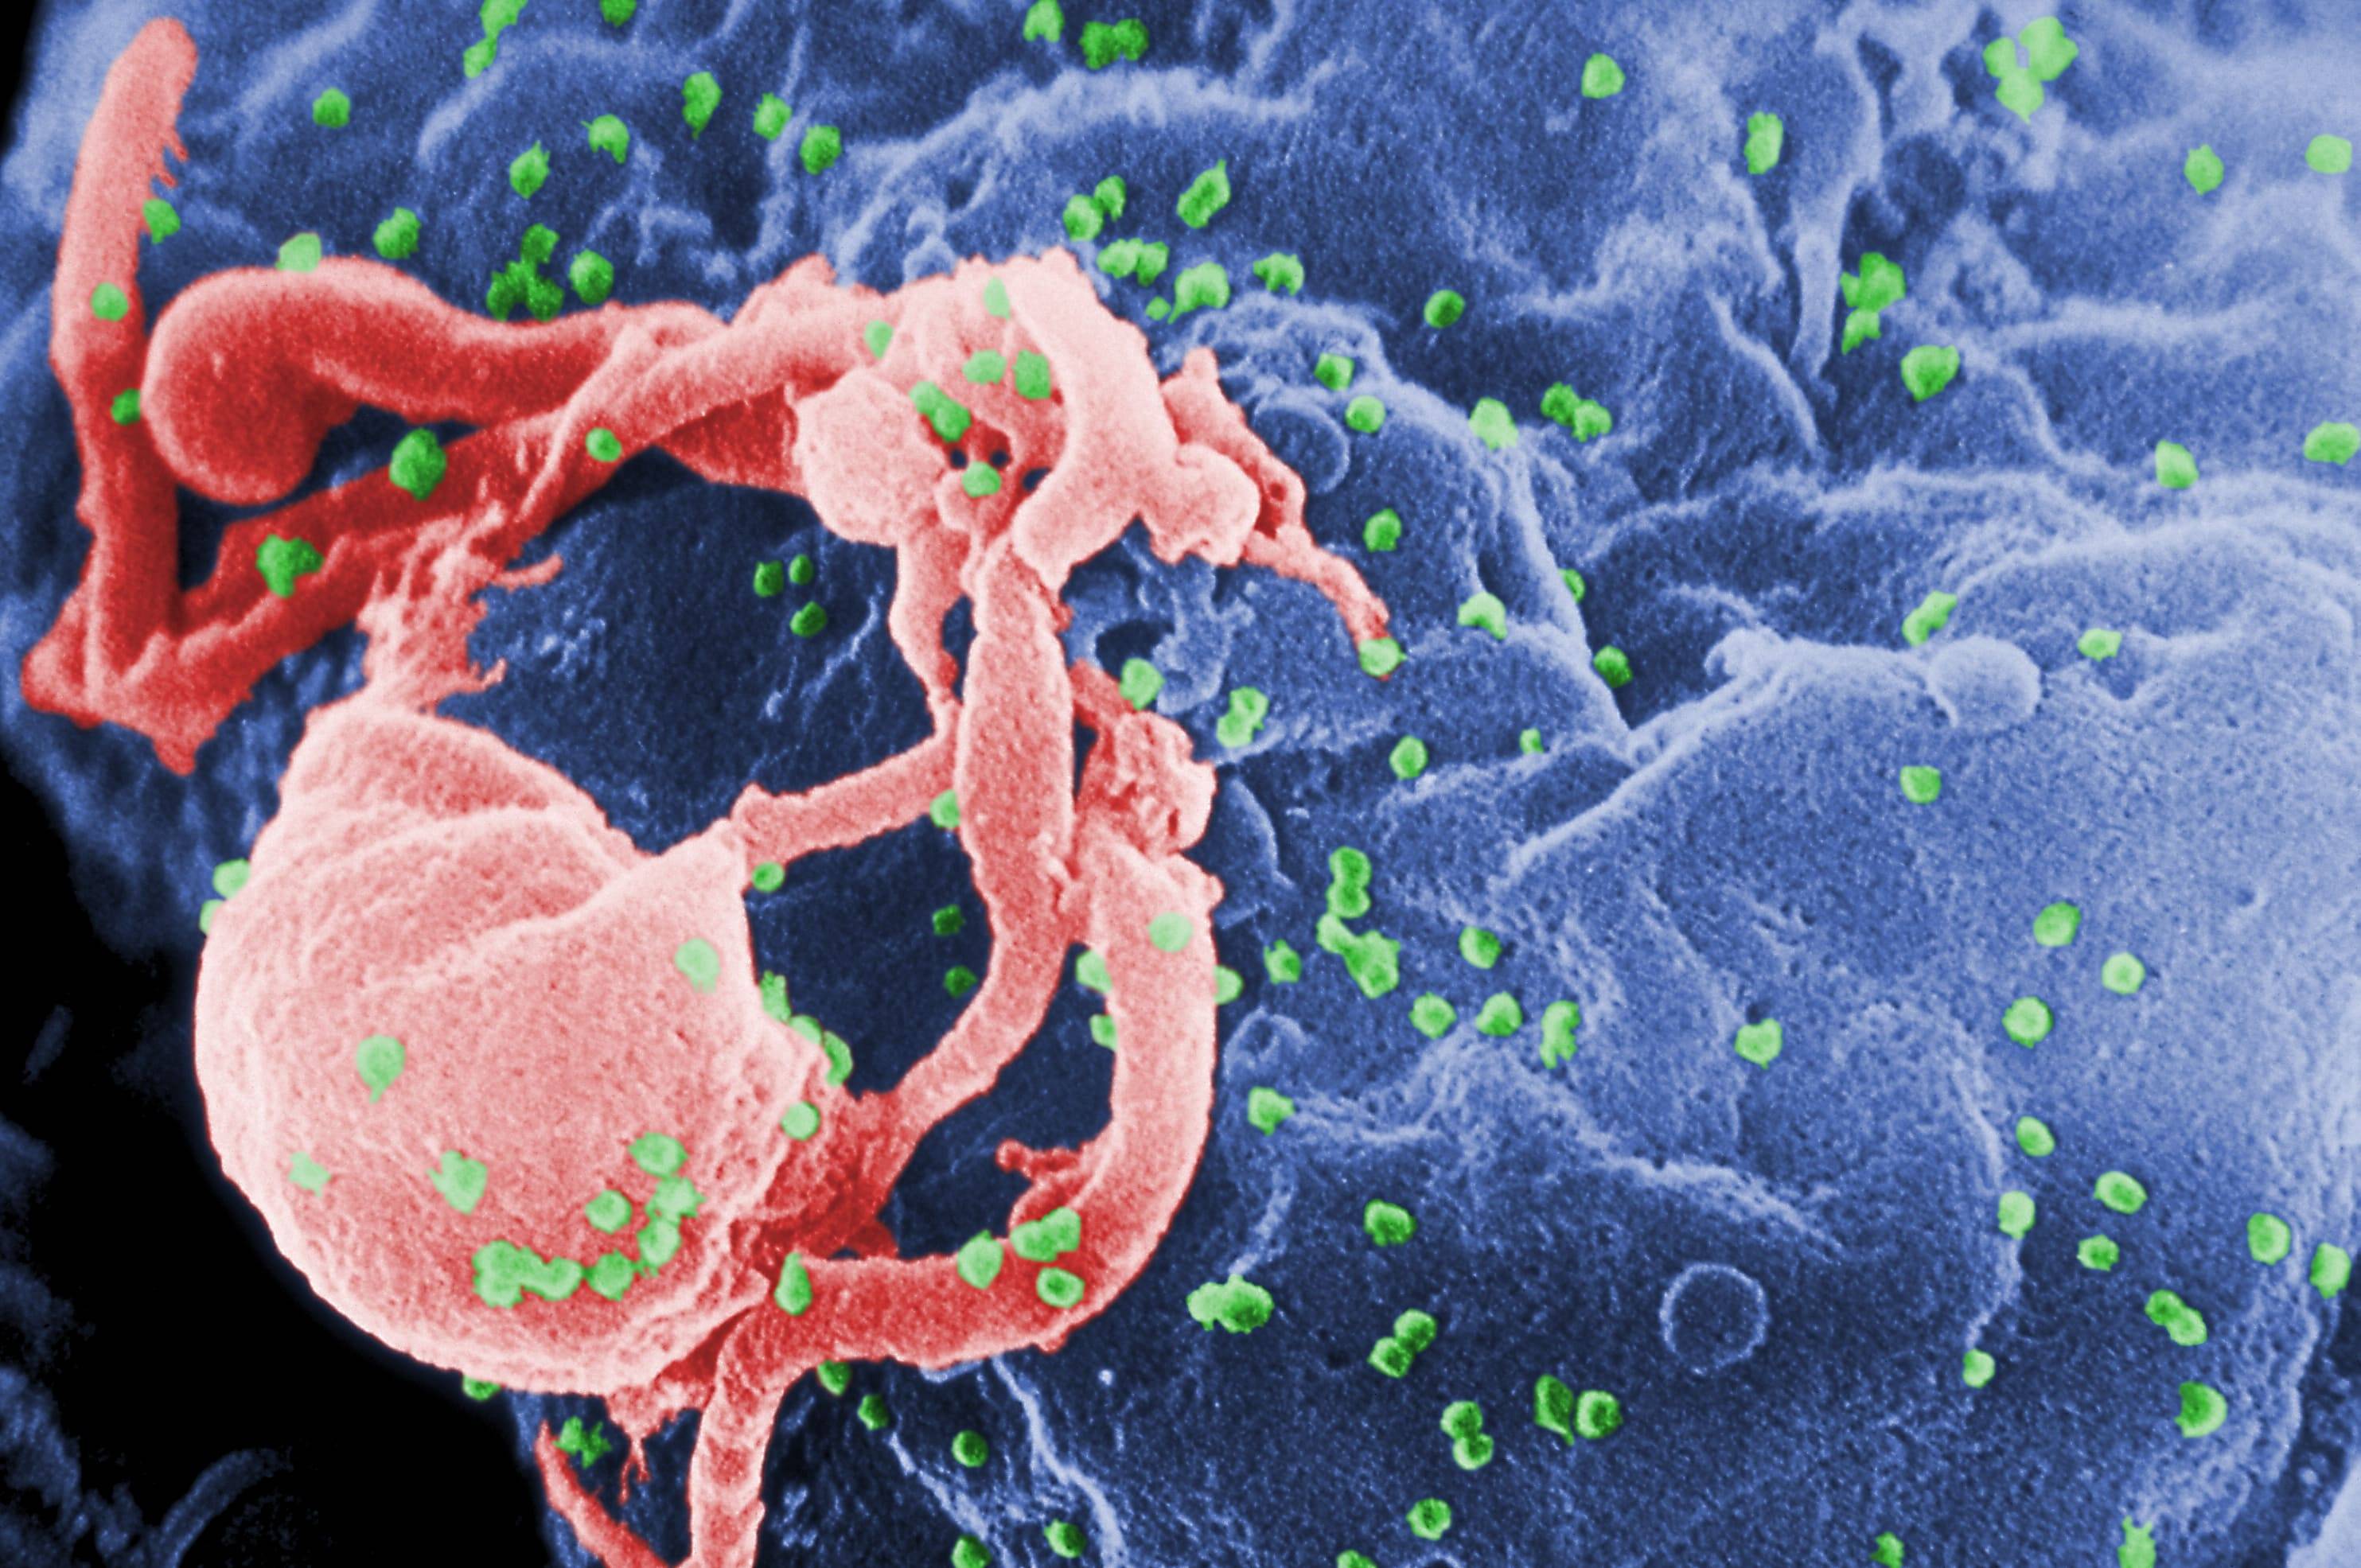 HIV, 'Istituto Pasteur scoperto metodo per distruggere virus